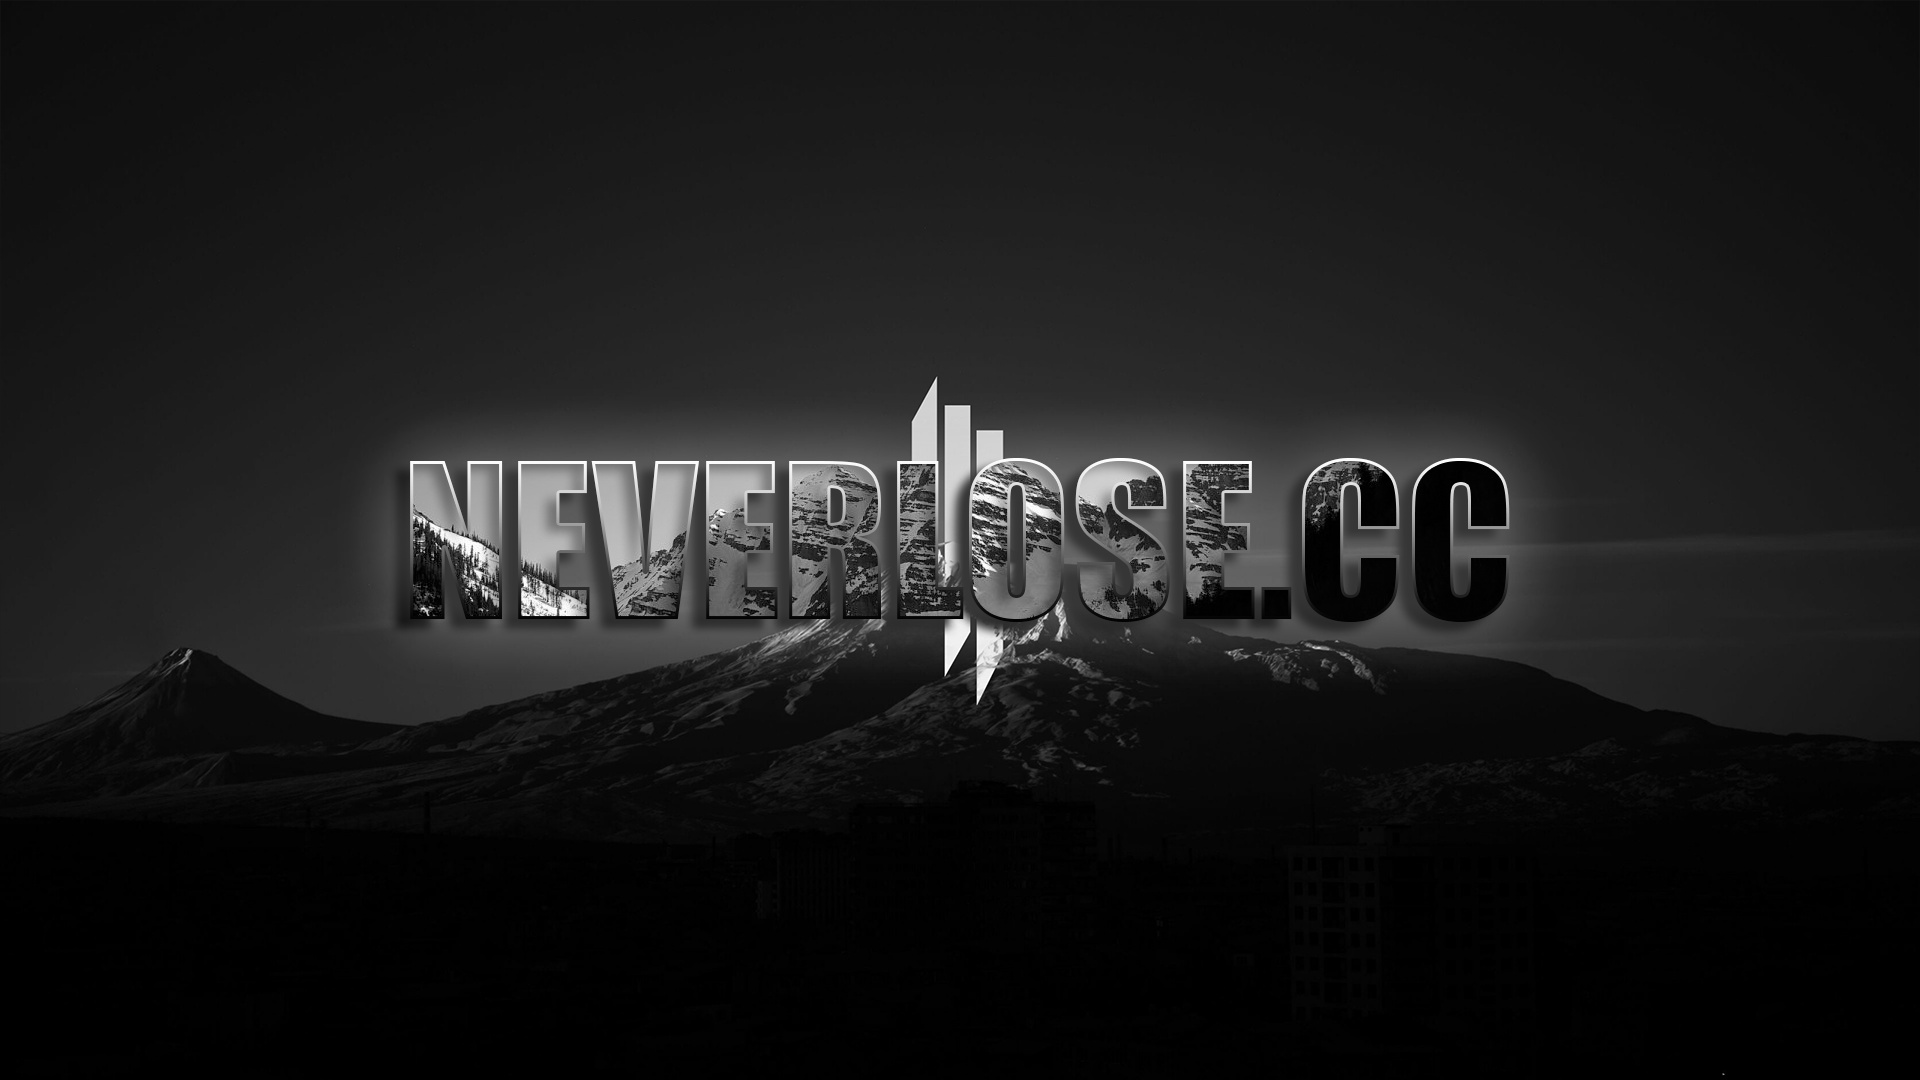 Https neverlose cc. Neverlose. Neverlose фон. Neverlose Wallpaper. Neverlose.cc logo.